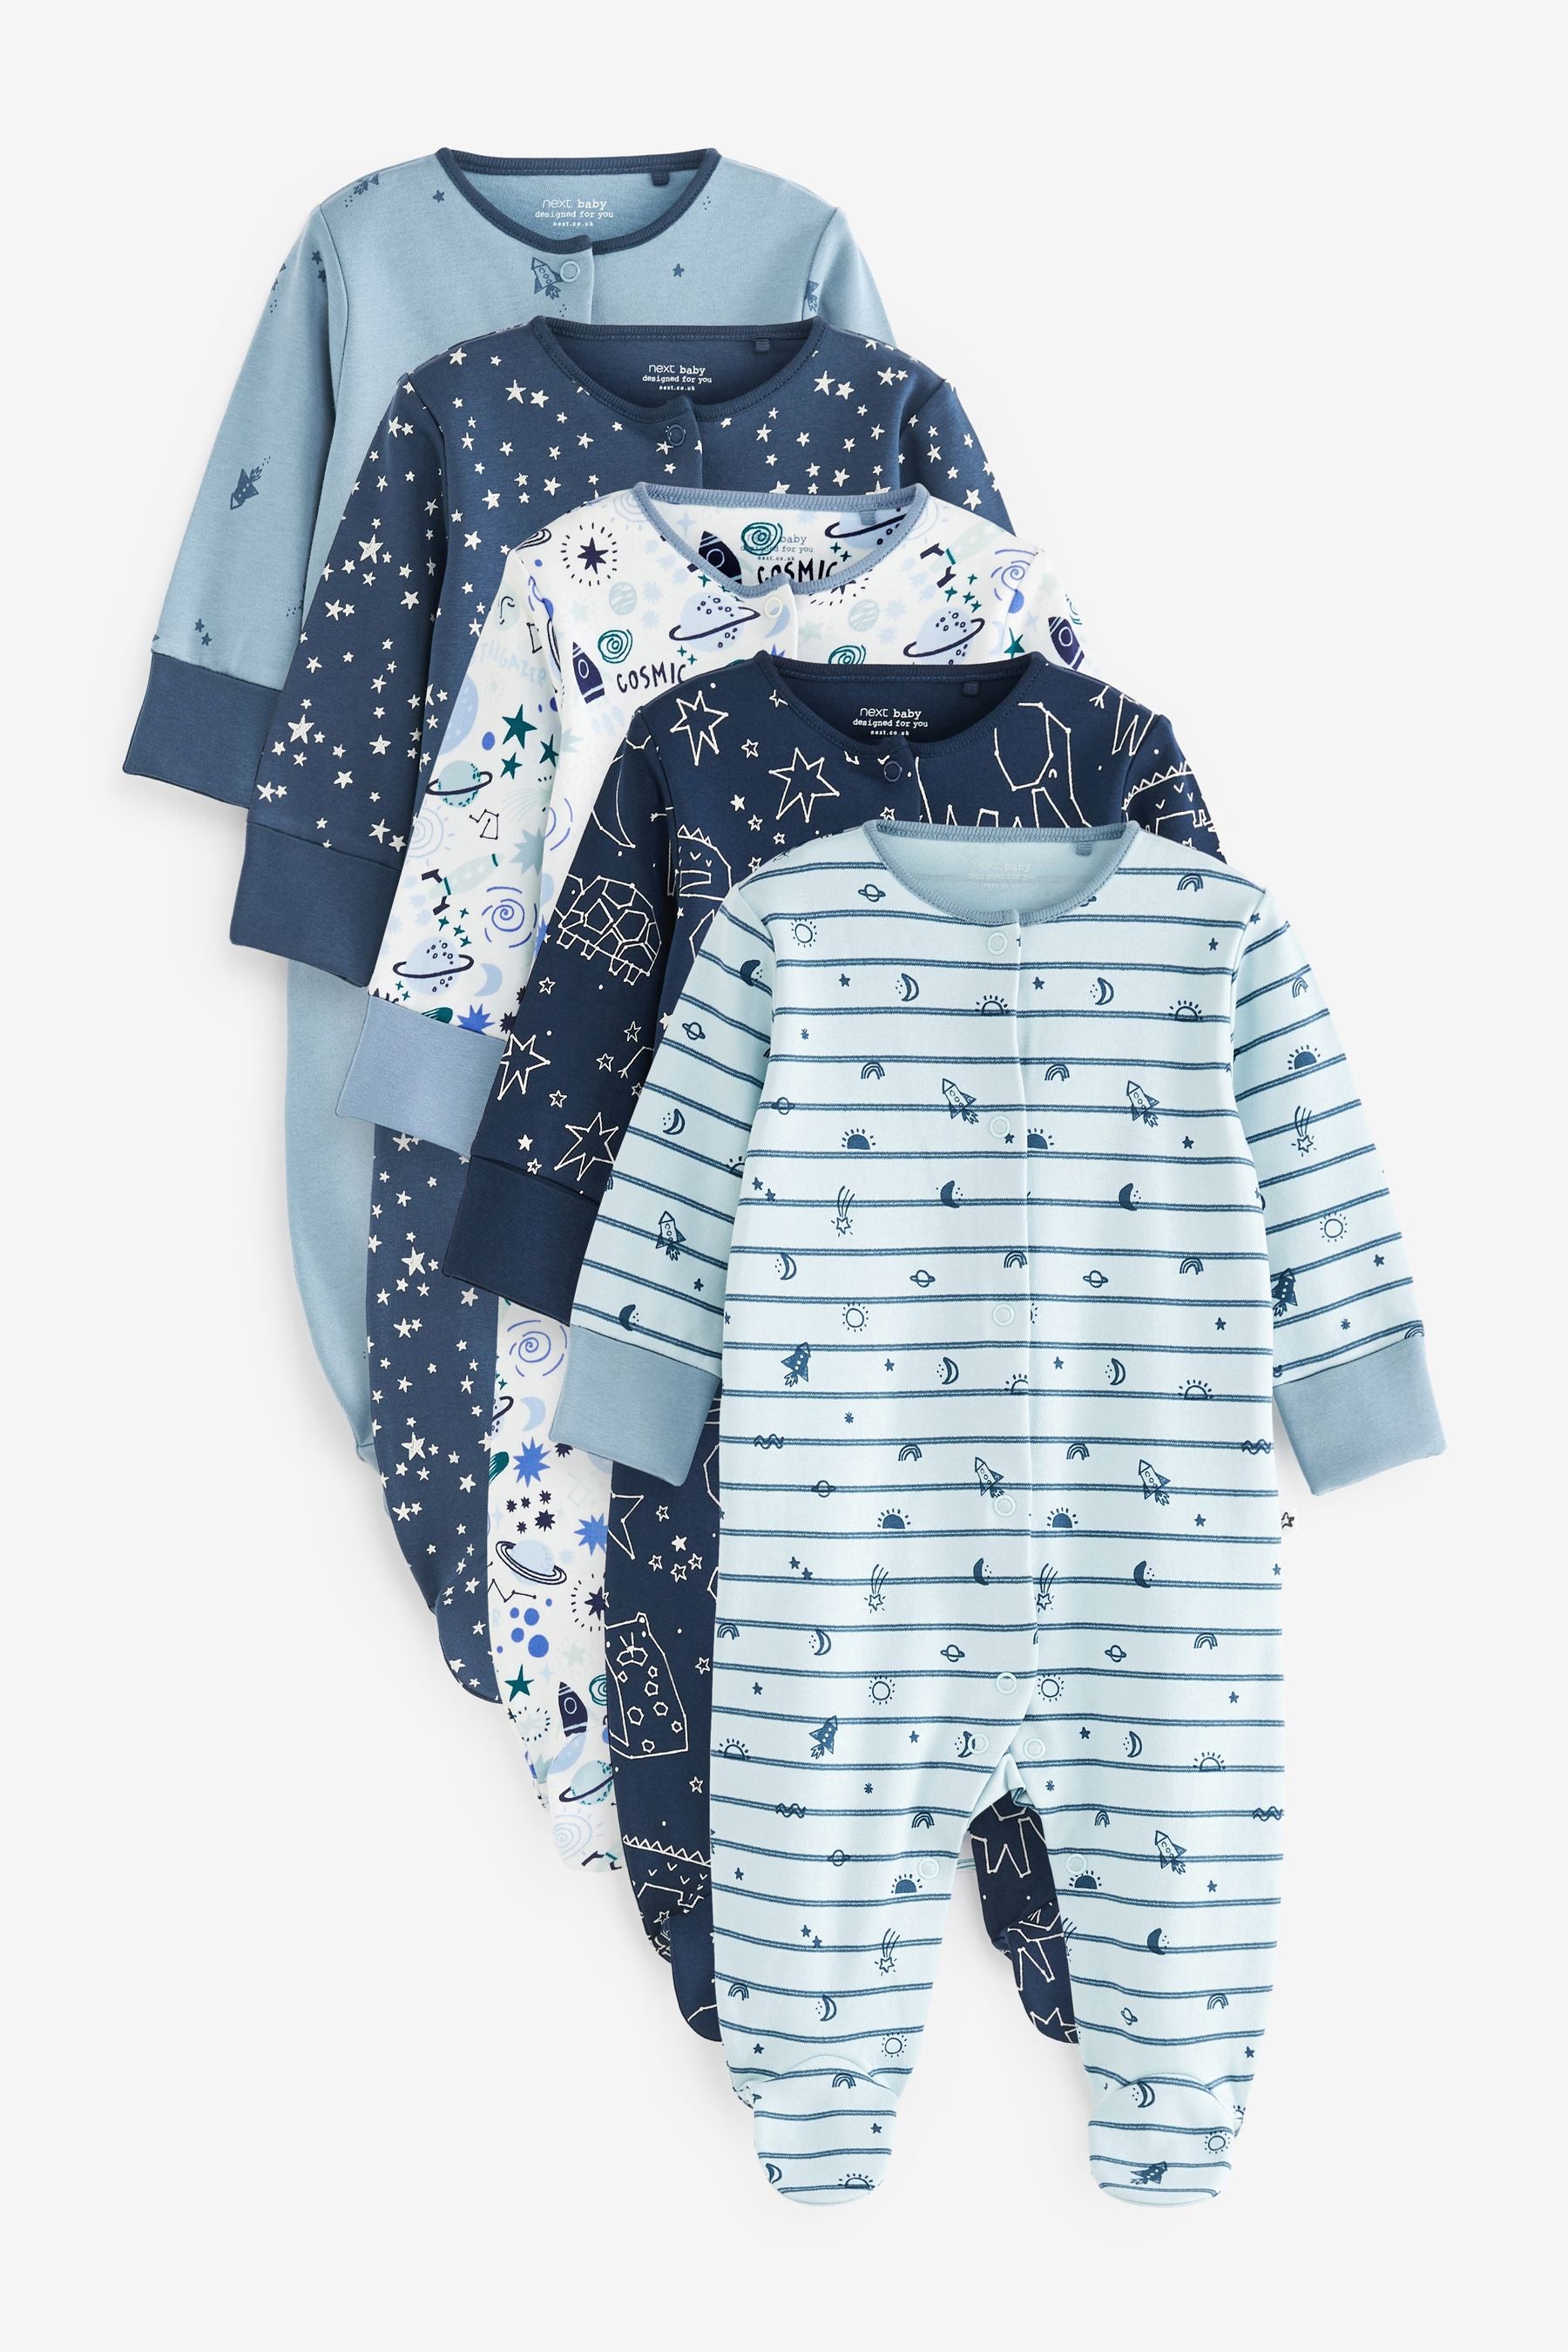 Blue Cosmic Print Baby Sleepsuits 5 Pack (0-2yrs)